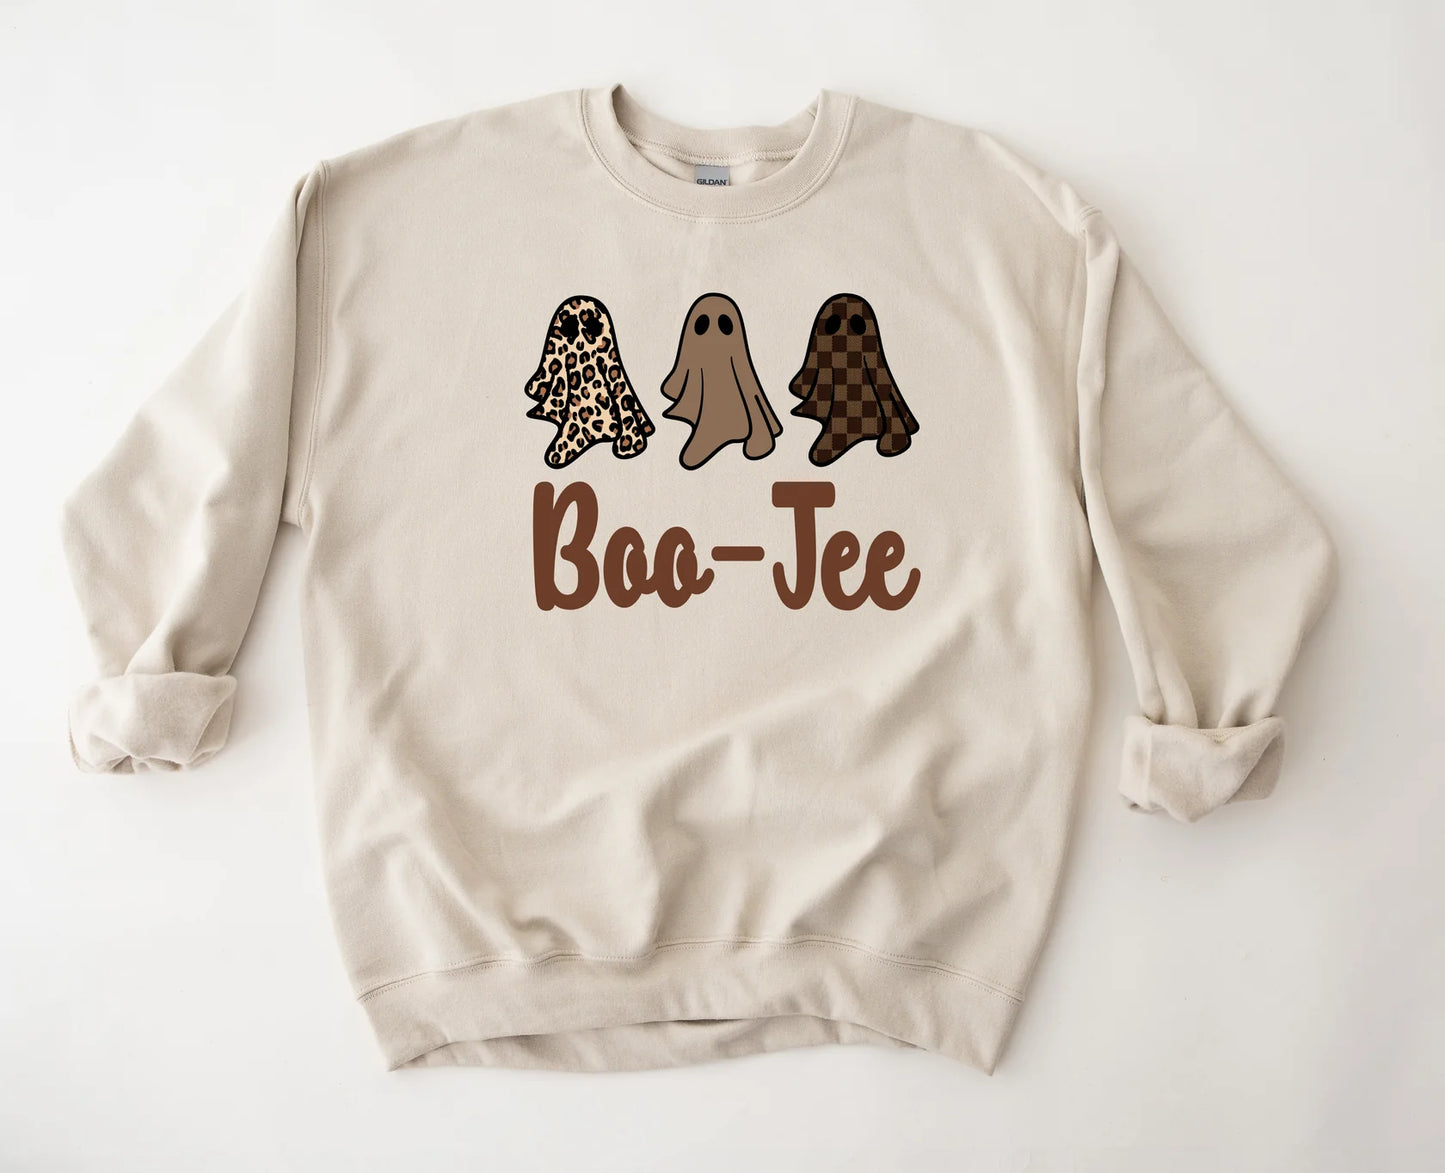 Boo-Jee Graphic Tee and Sweatshirt